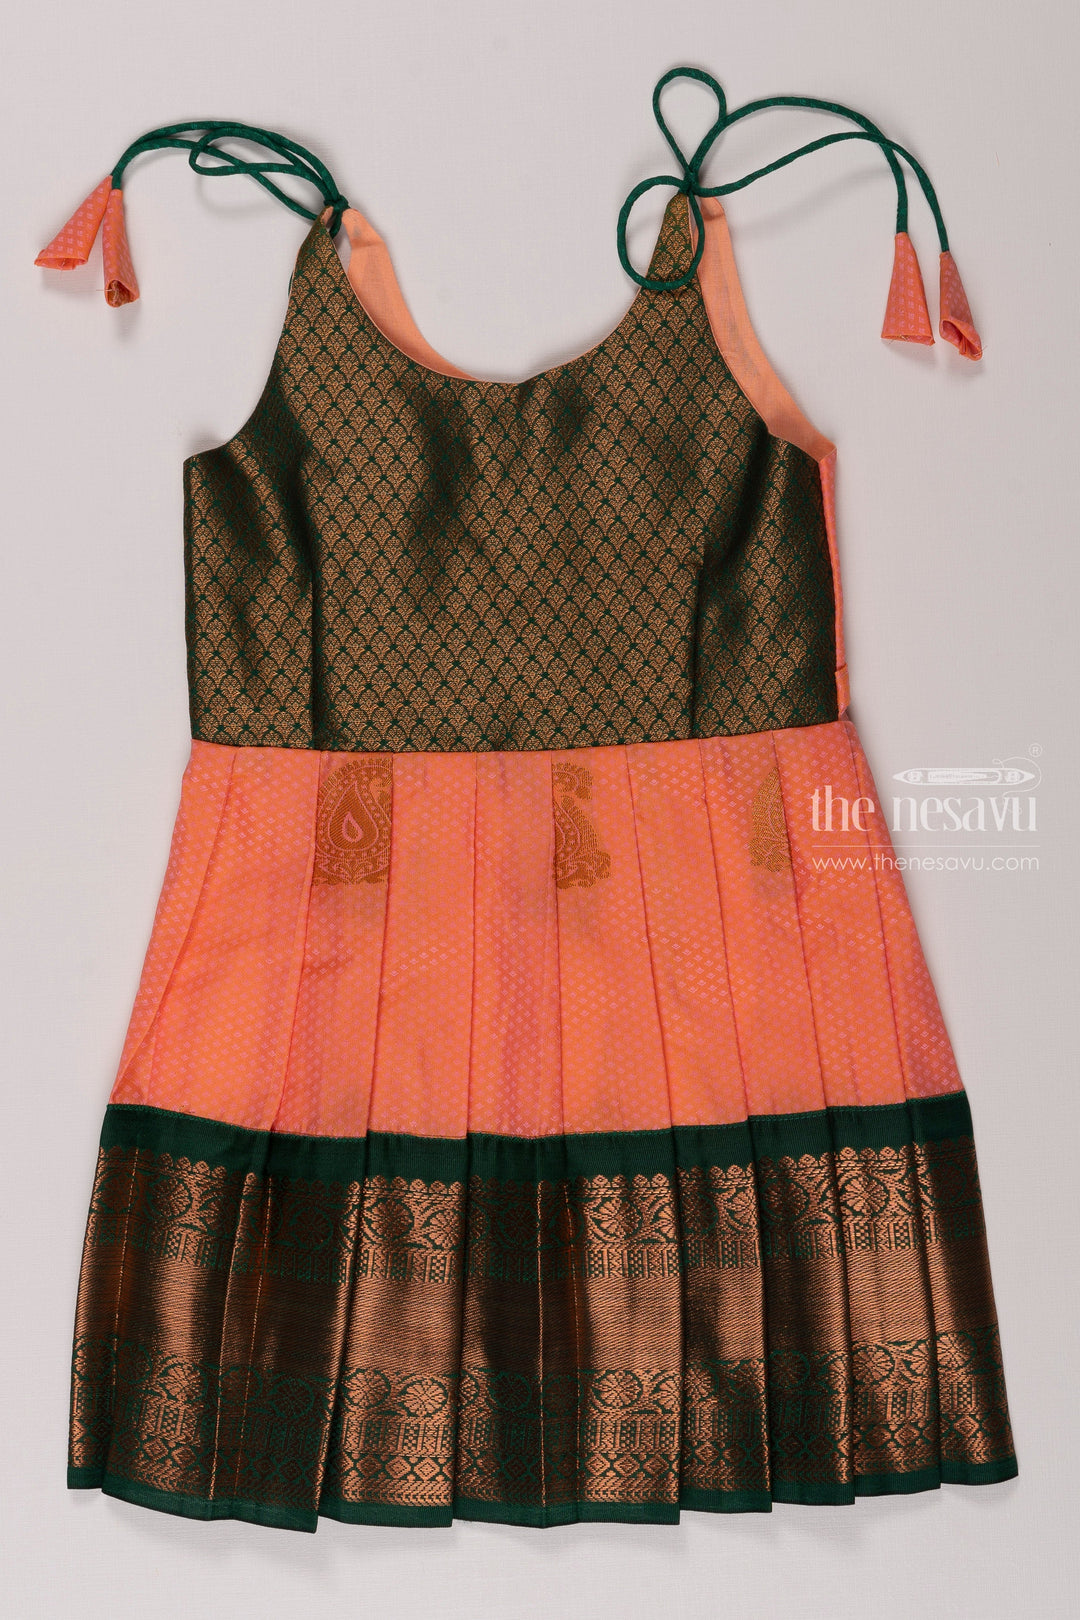 The Nesavu Tie-up Frock Girls Silk TieUp Ethnic Frock - Boutique Style Elegance Nesavu 14 (6M) / Pink / Style 1 T343A-14 Trendy Silk Tie Up Frock for Girls | Floral Print Ethnic Dress | The Nesavu